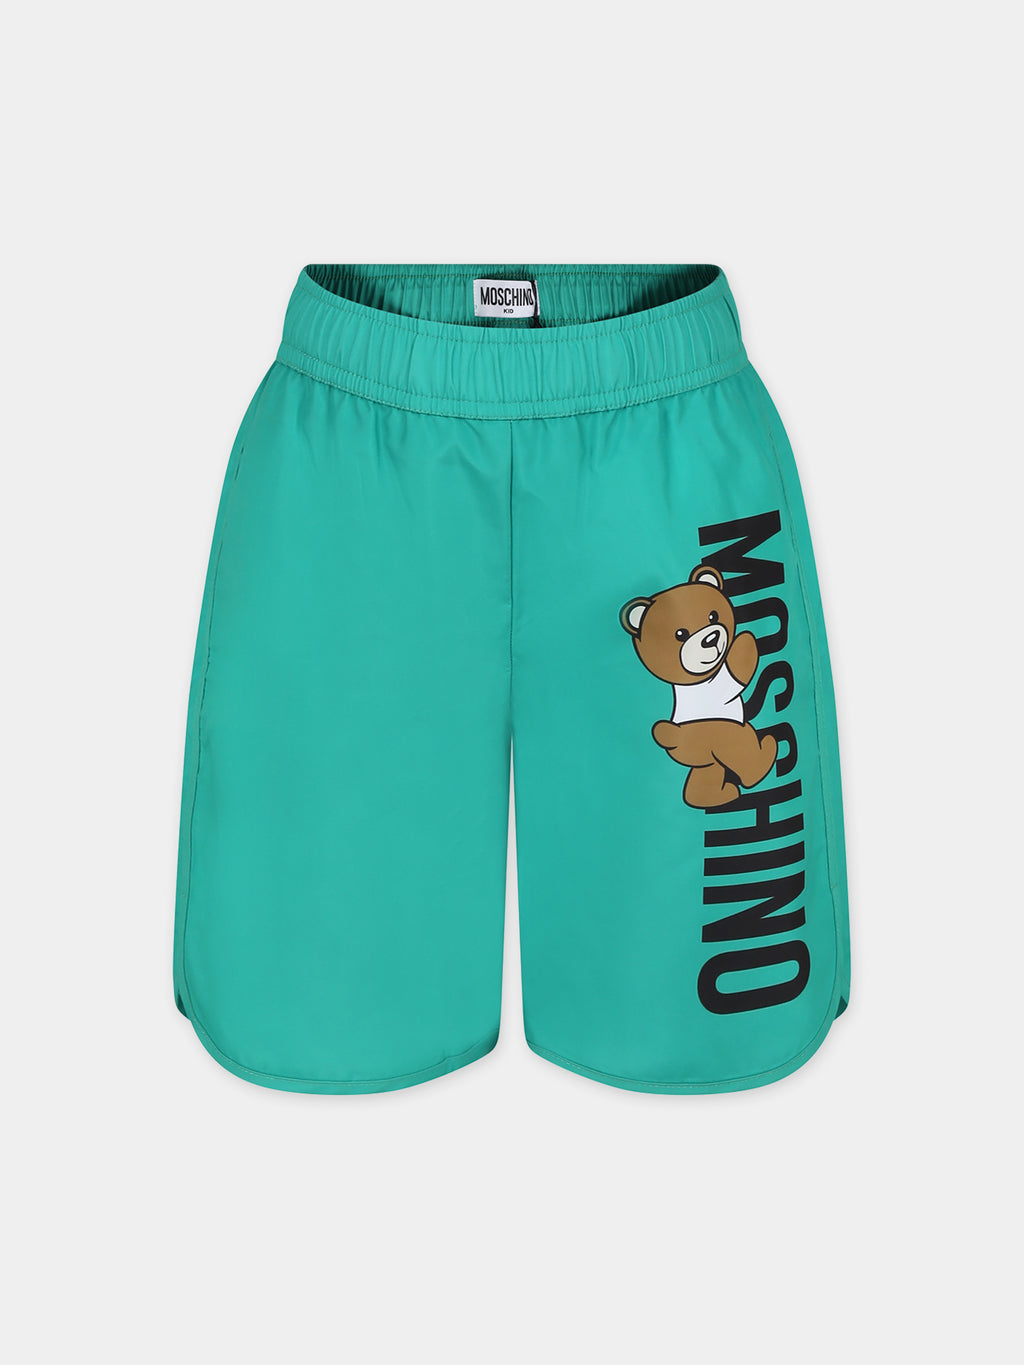 Green swim shorts for boy with Teddy Bear and logo